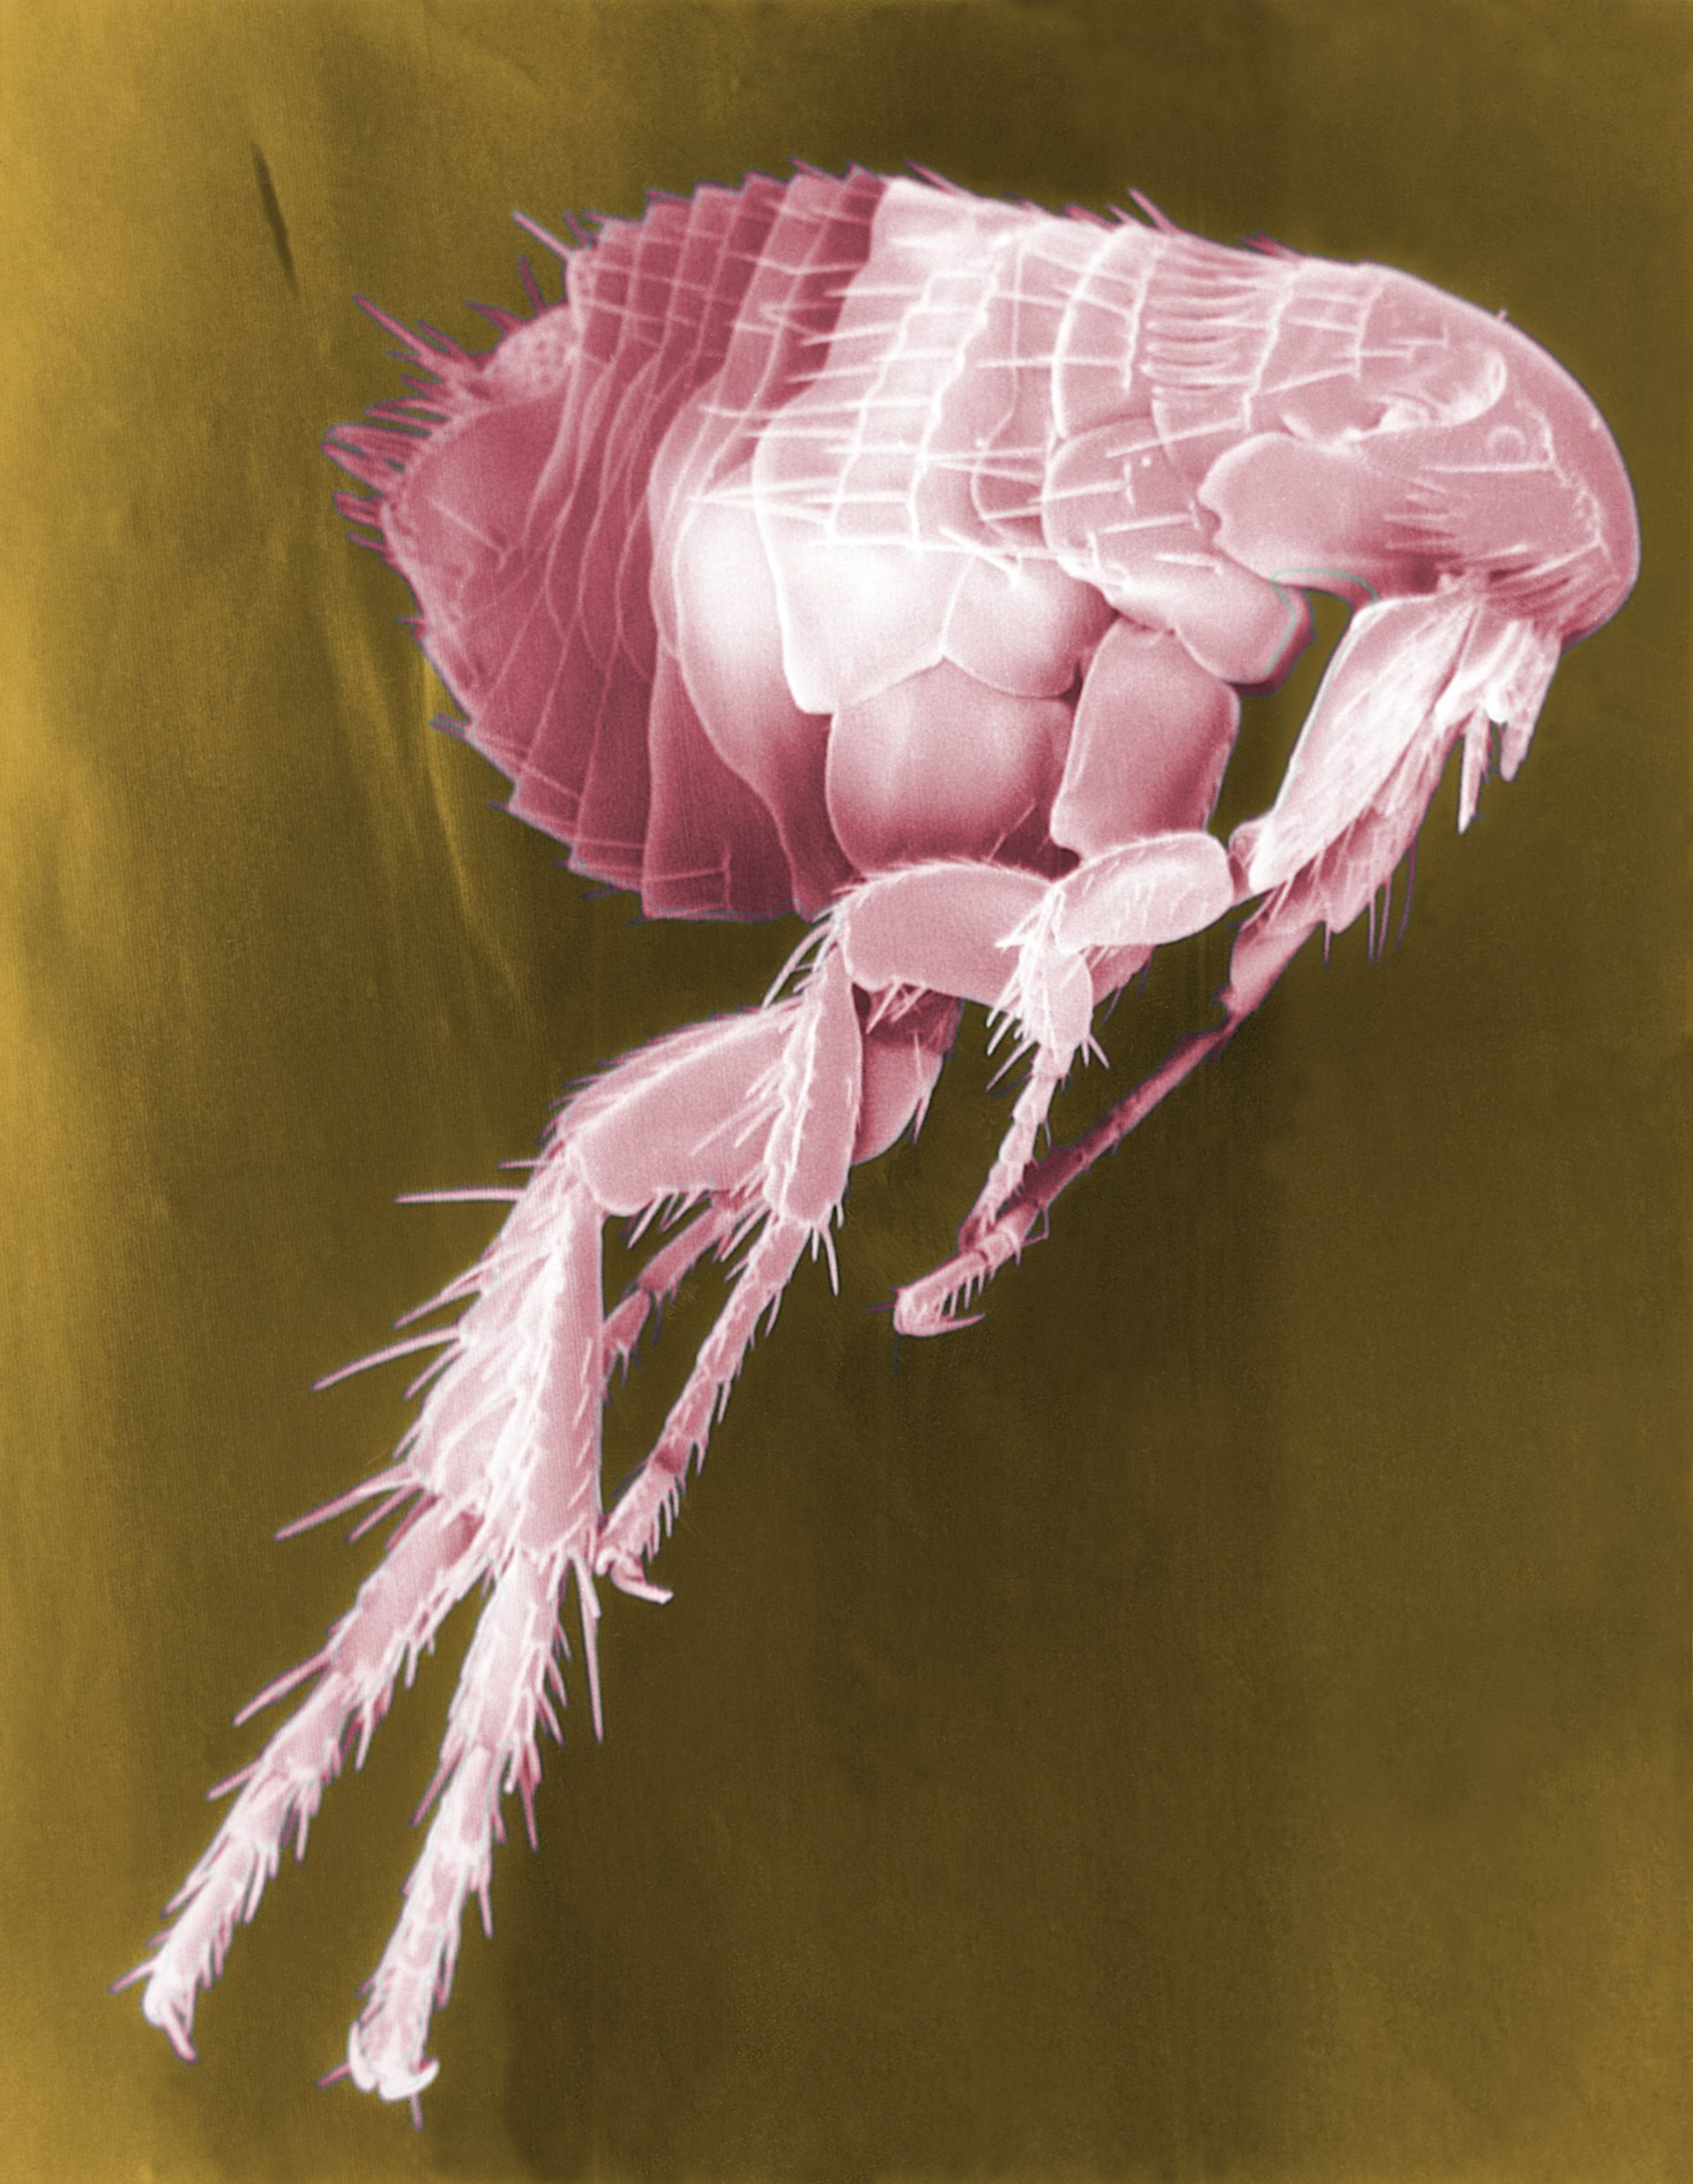 Flea Scanning Electron Micrograph